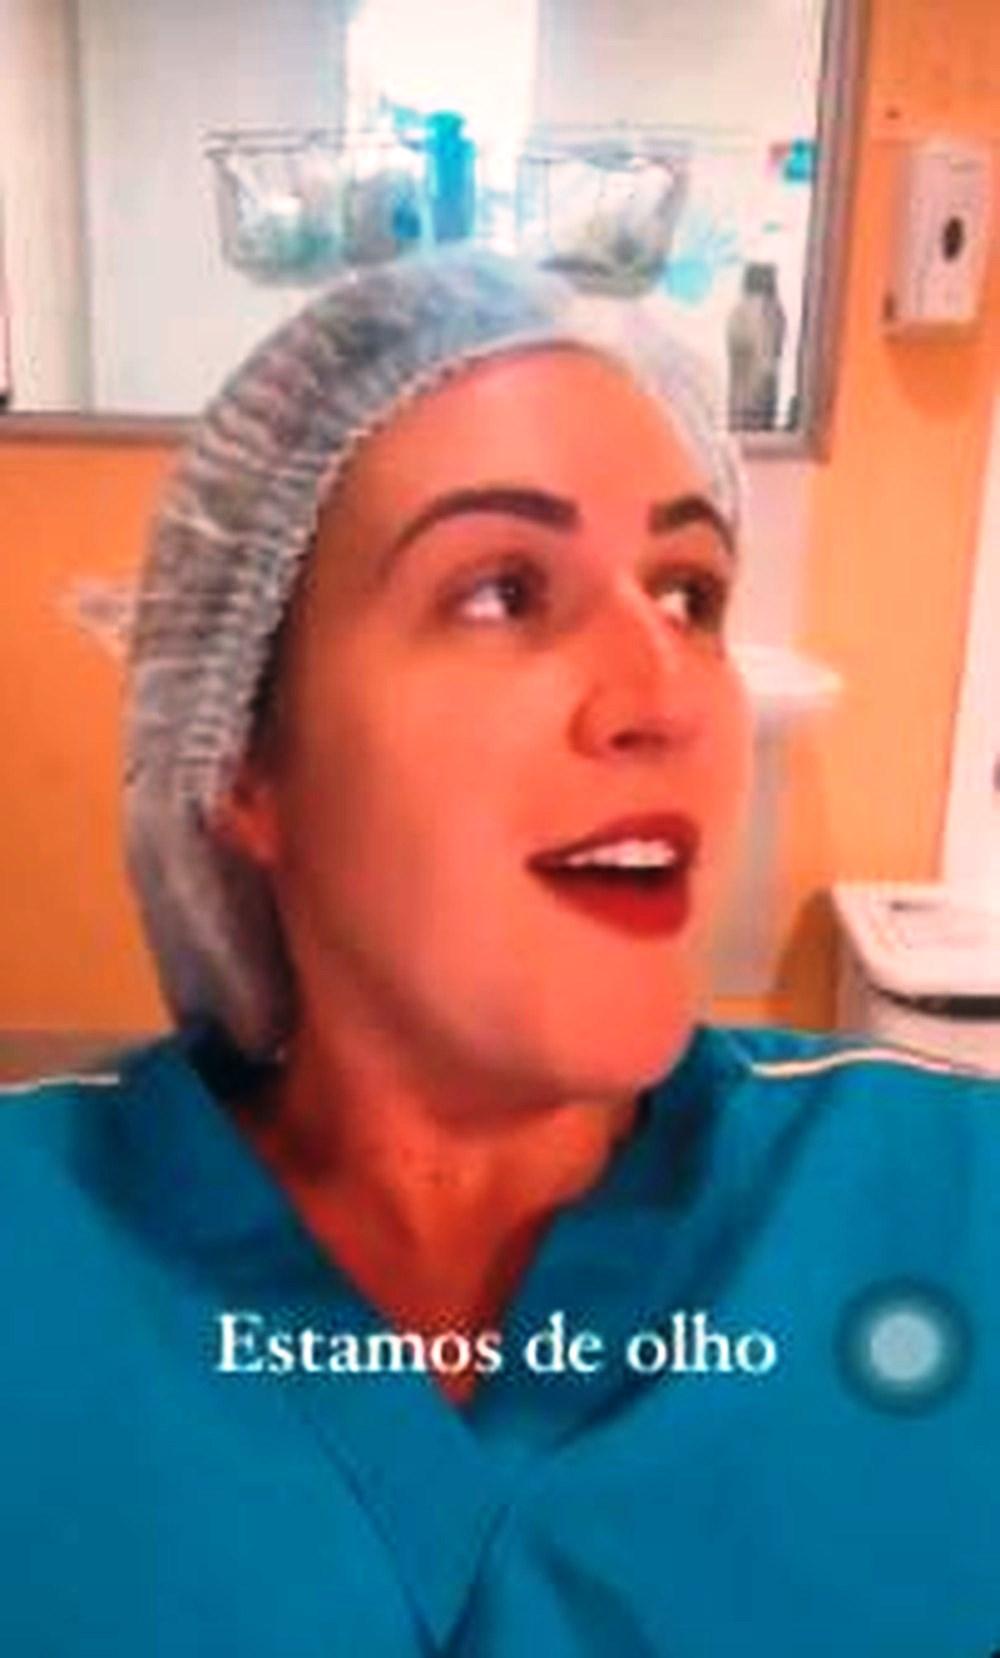 Enfermeira publica vídeos sem máscara no trabalho e debochando da CoronaVac